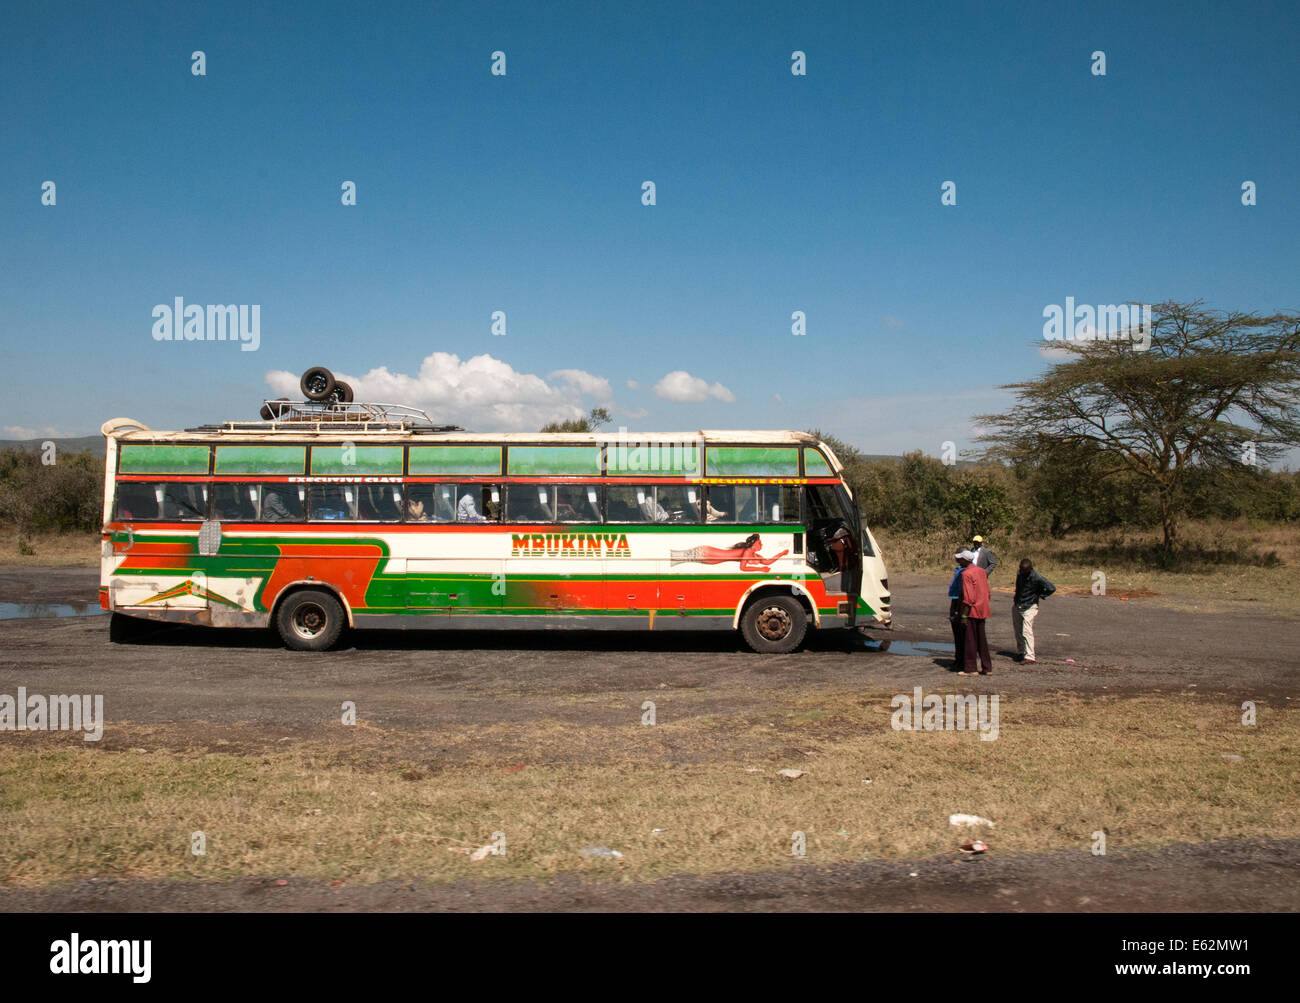 Broken down single decker bus long distance coach with driver outside worrying on Naivasha Nakuru road Kenya Africa Stock Photo